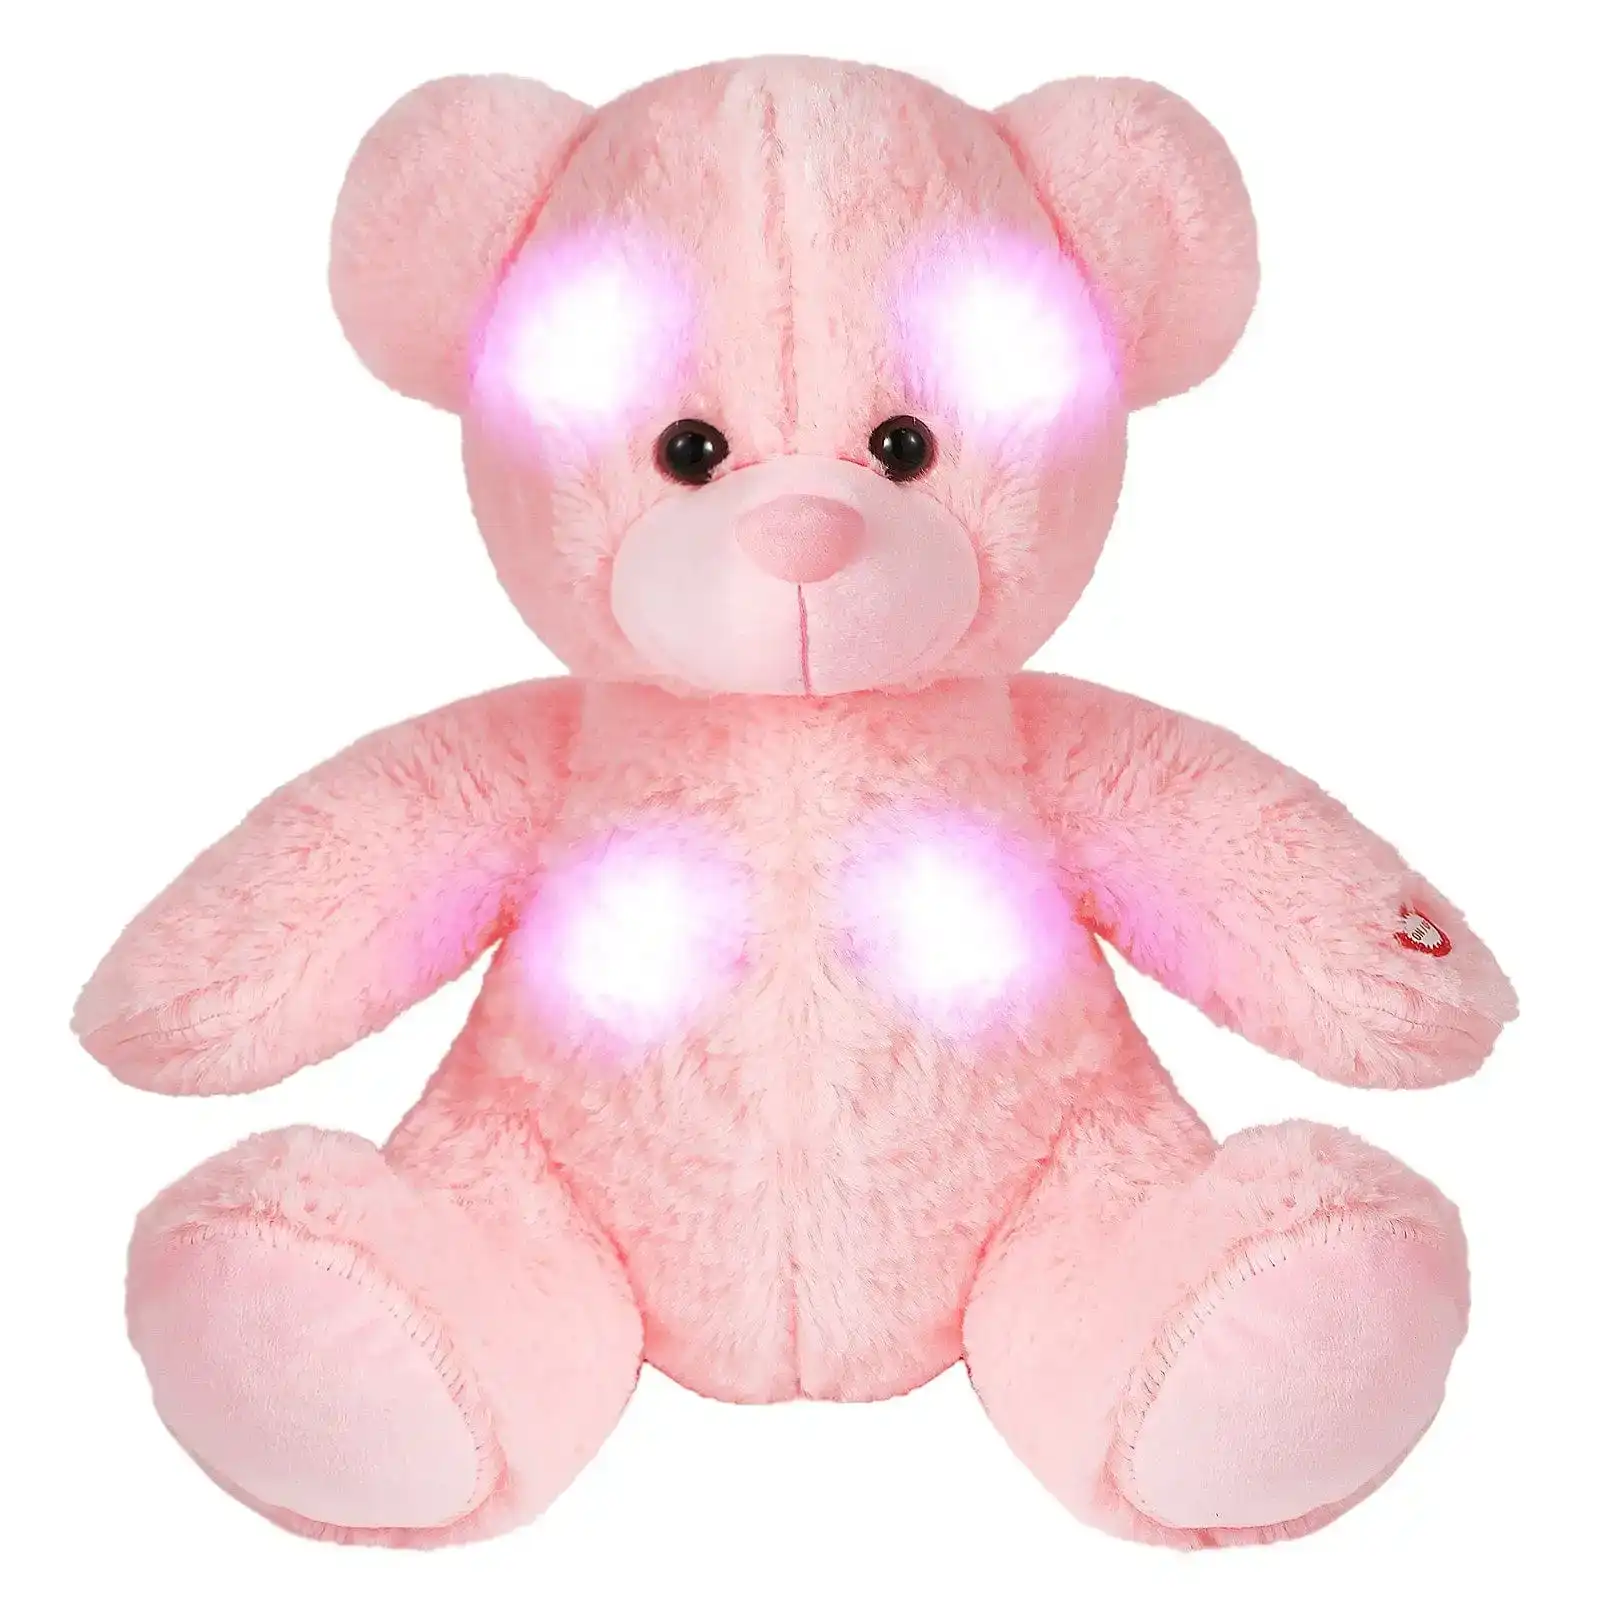 30cm Pink LED Teddy Bear Plush Toy